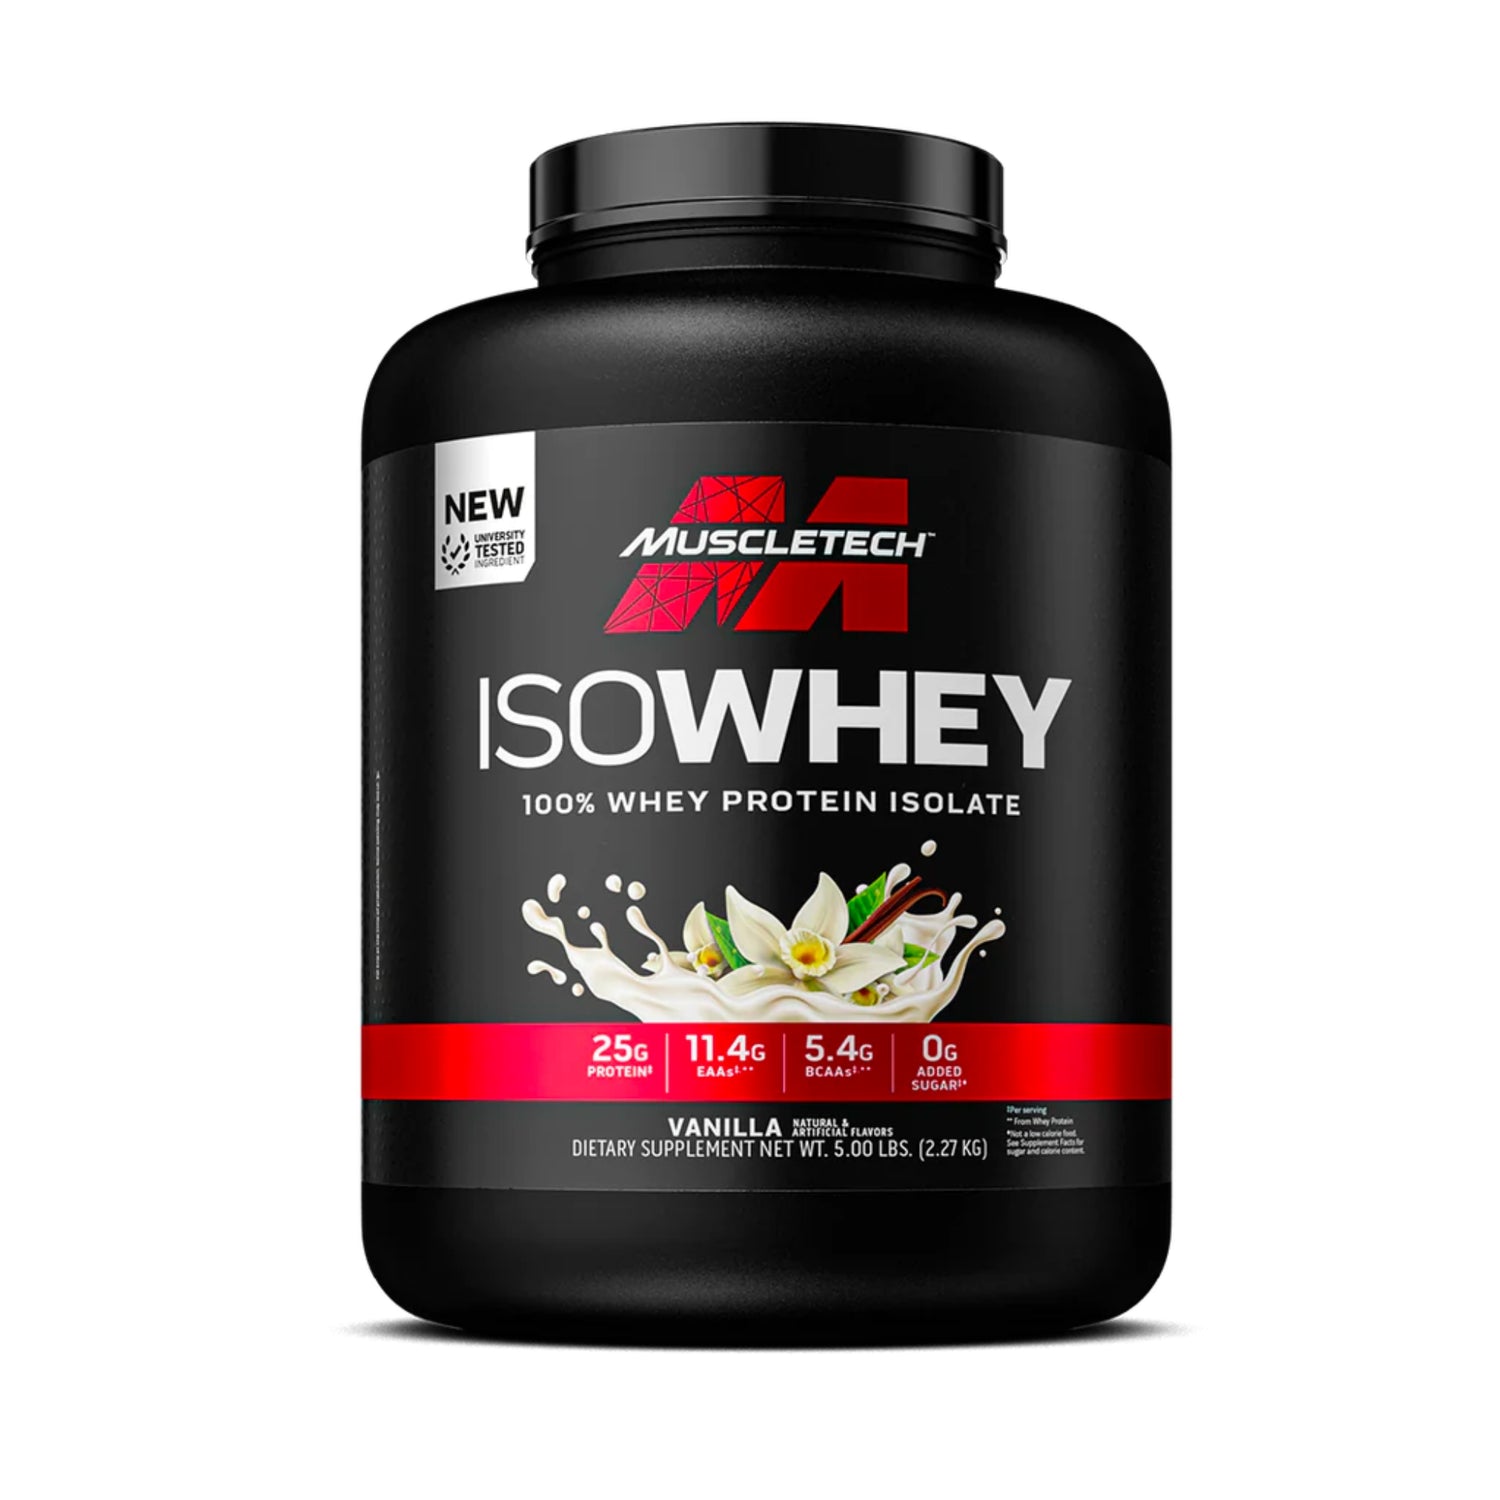 Muscletech Isowhey